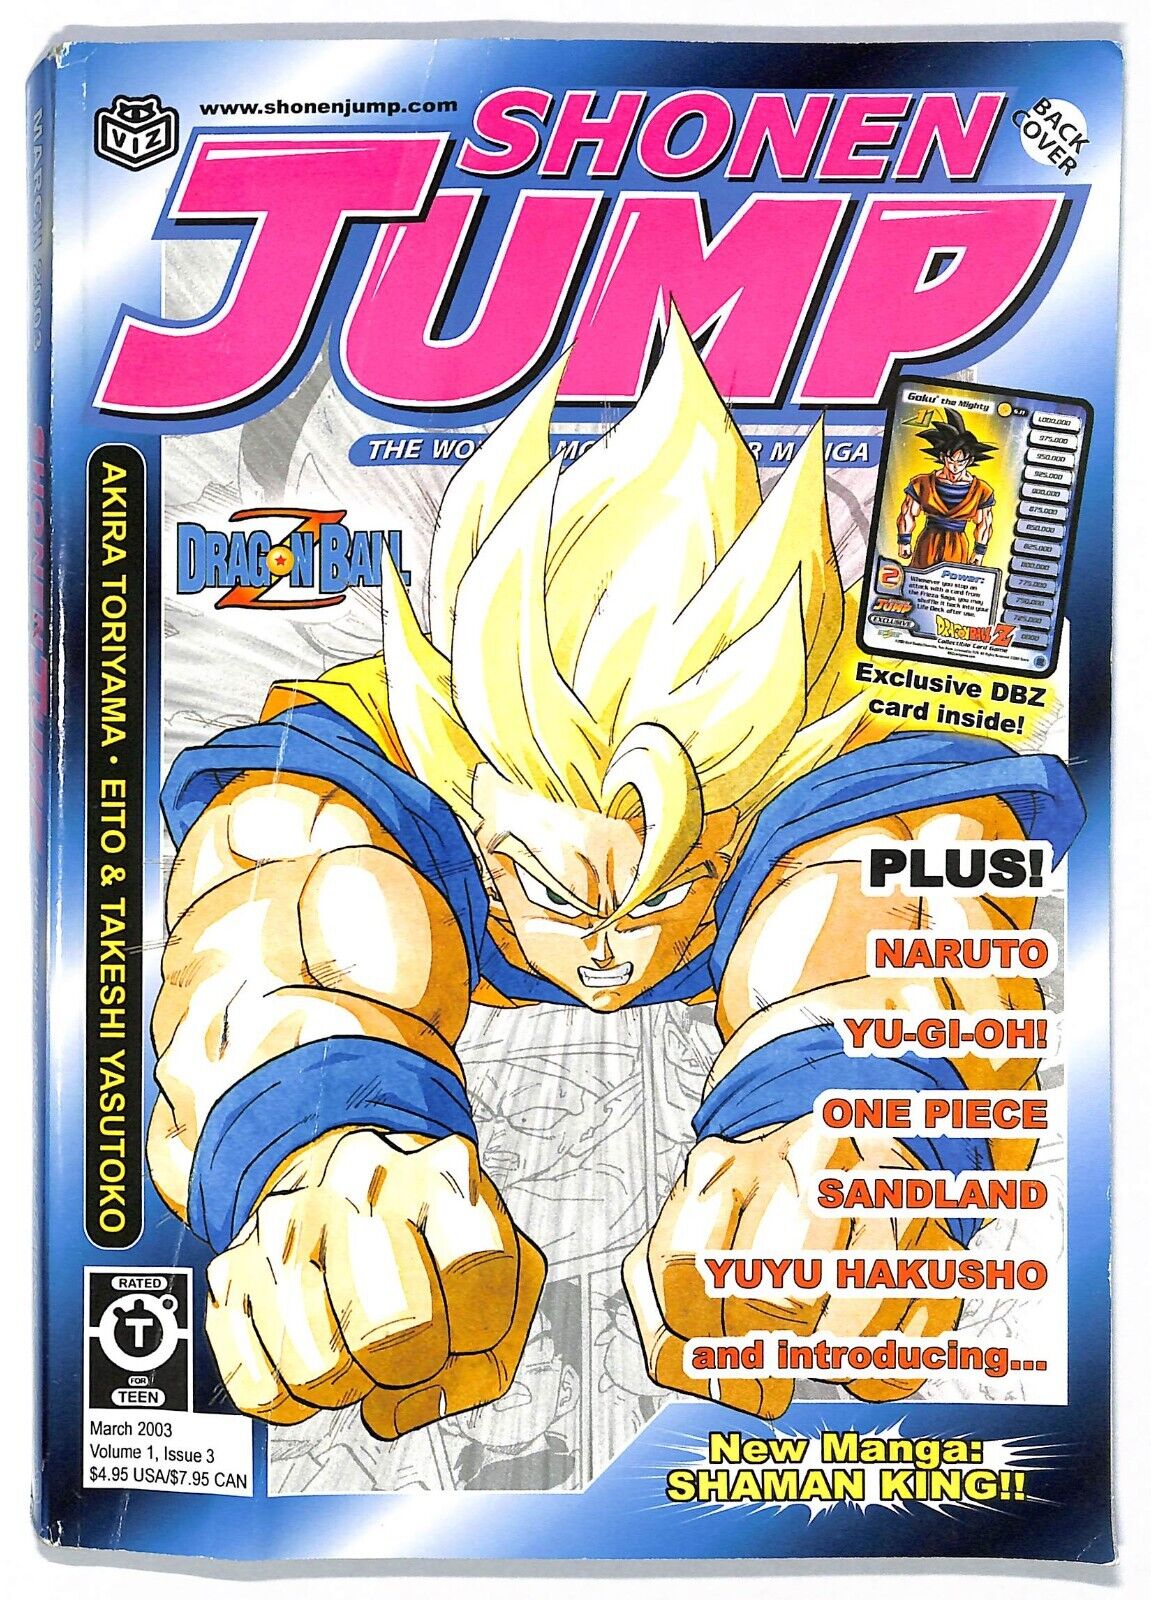 Shonen Jump Magazine Manga Issue 3 March 2003 Vol. 1 Dragon Ball Z